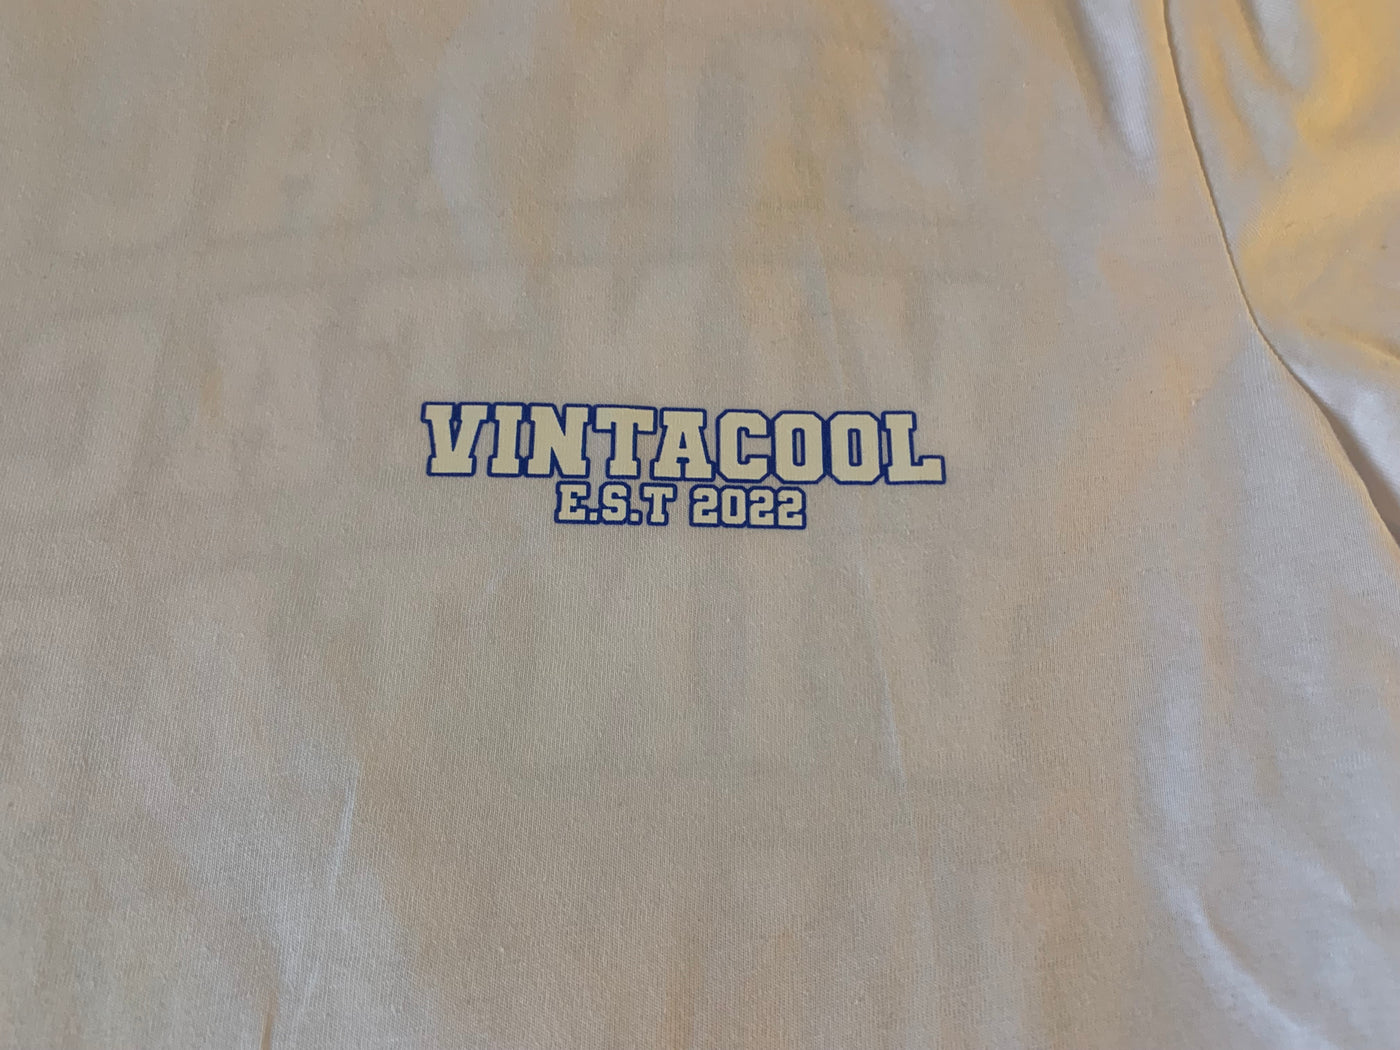 vintacool t-shirt logo